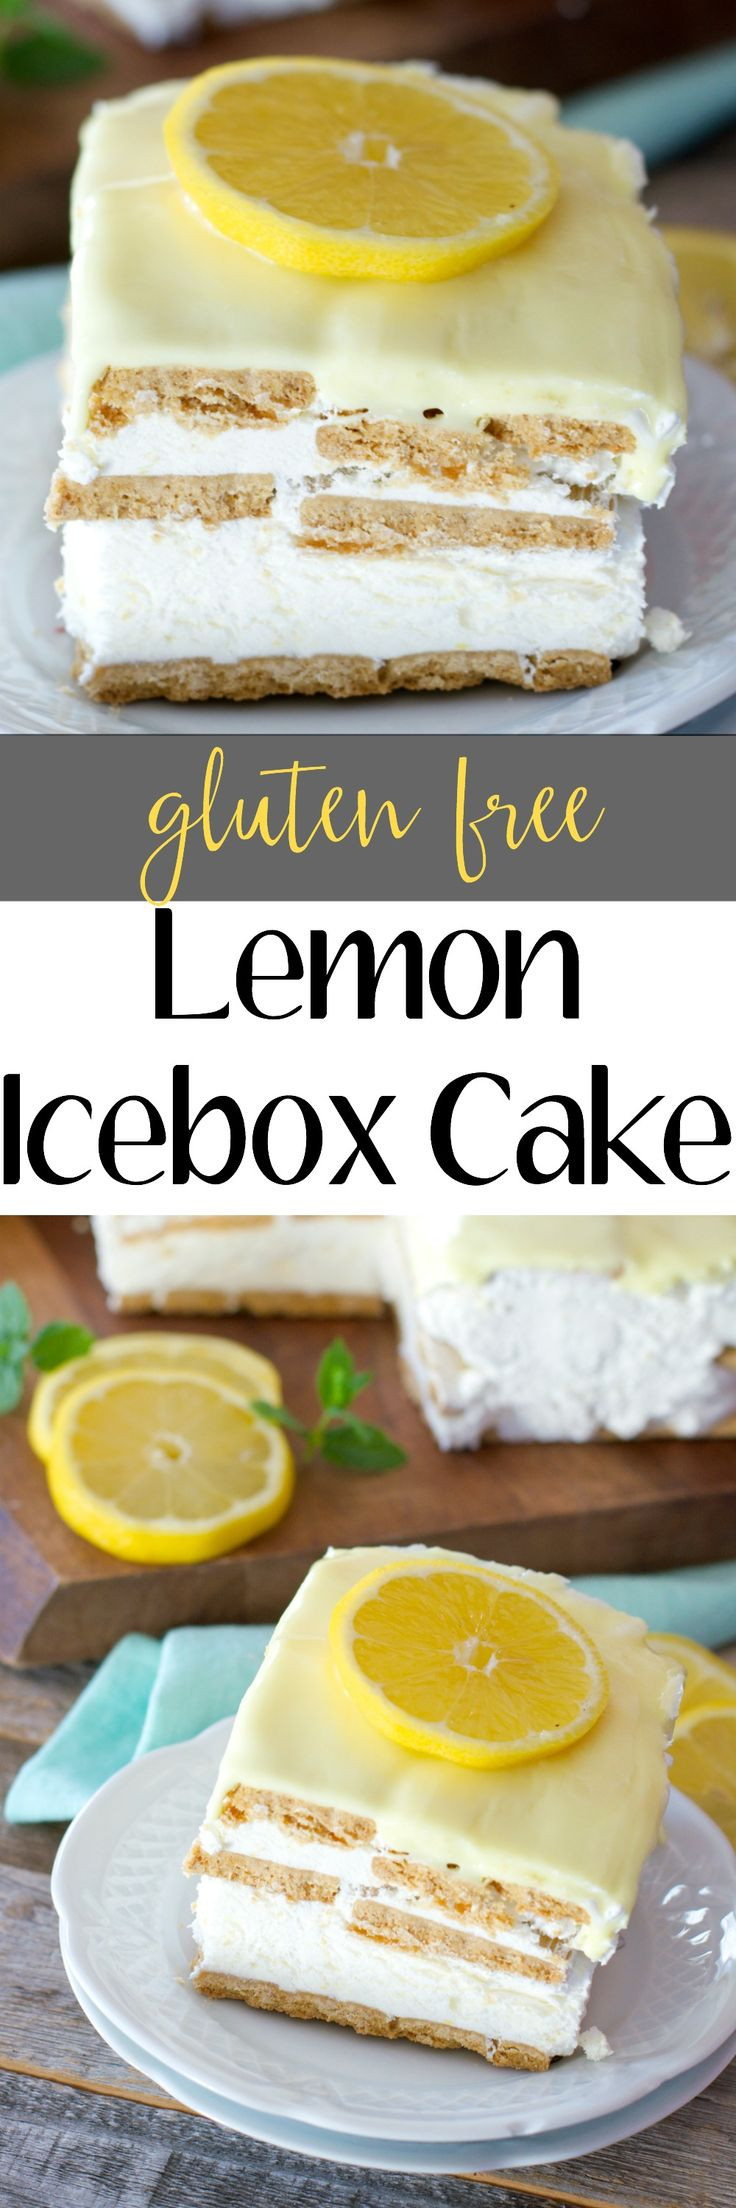 Summer Lemon Desserts
 This quick and easy Lemon Icebox Cake has just six